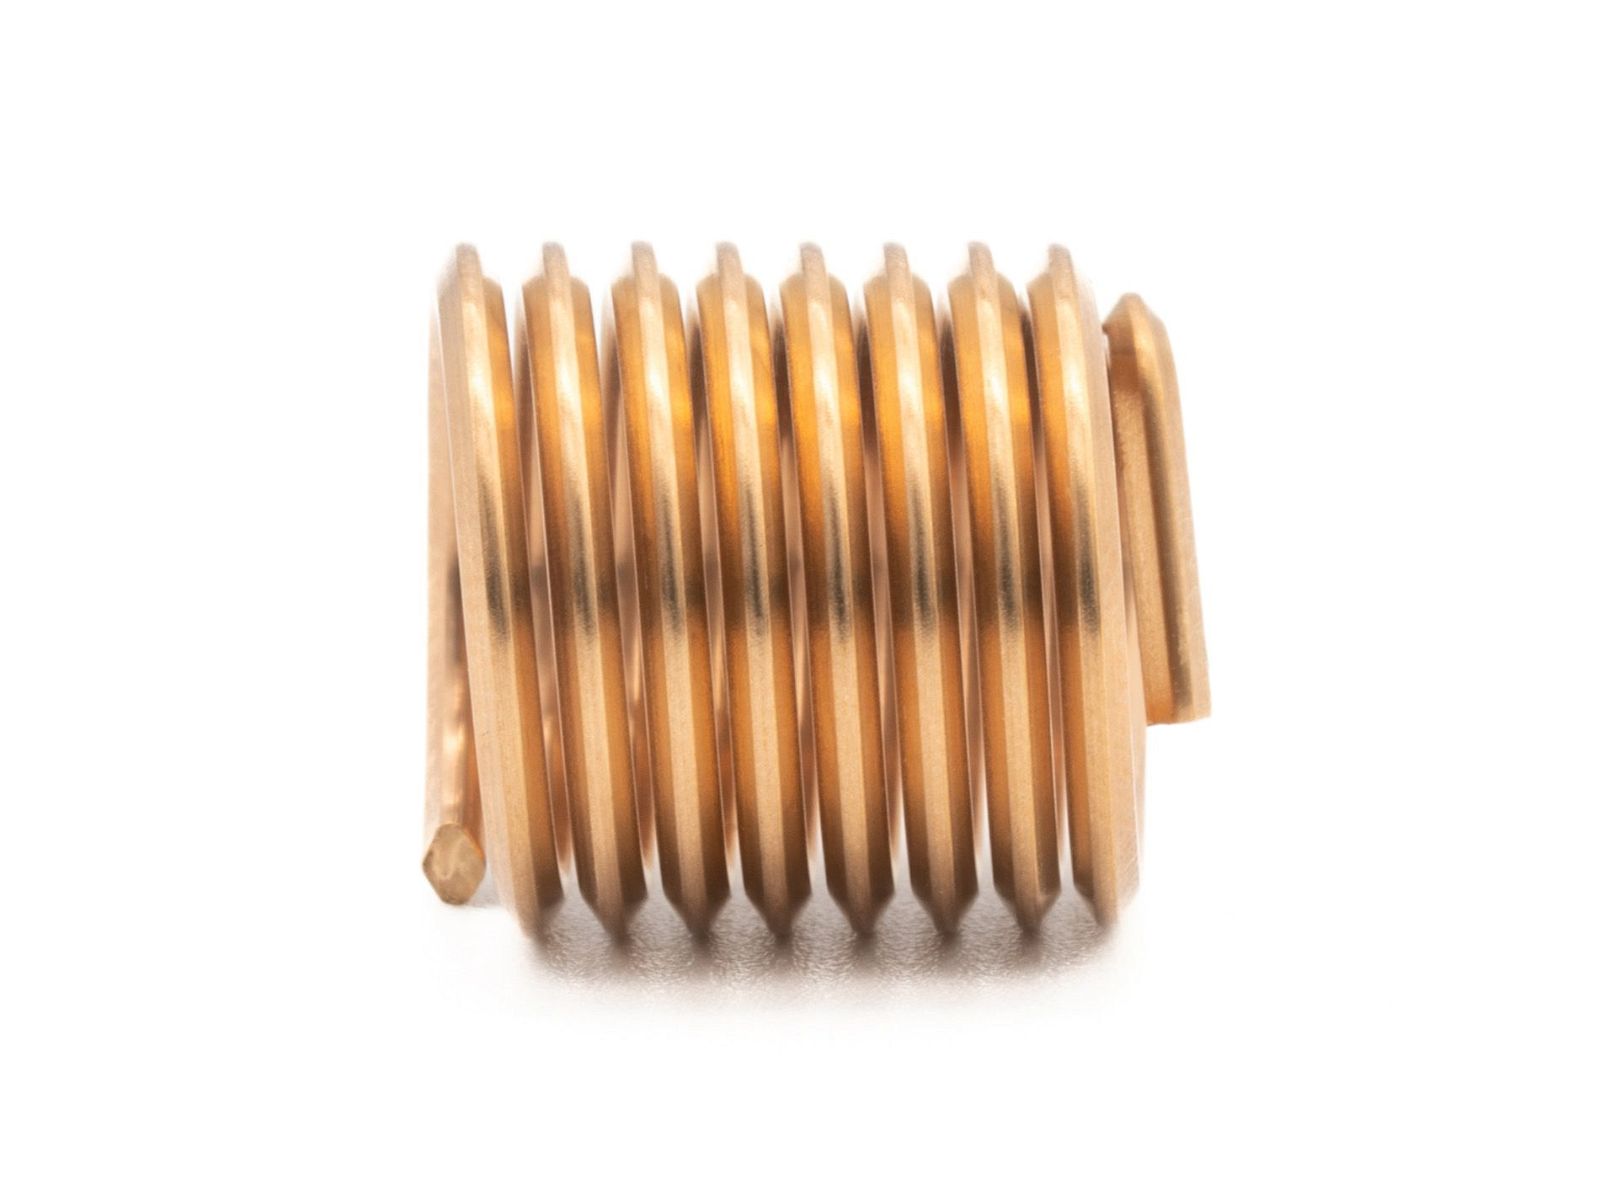 BaerCoil Wire Thread Inserts M 12 x 1.75 - 1.5 D (18 mm) - free running - Bronze - 100 pcs.